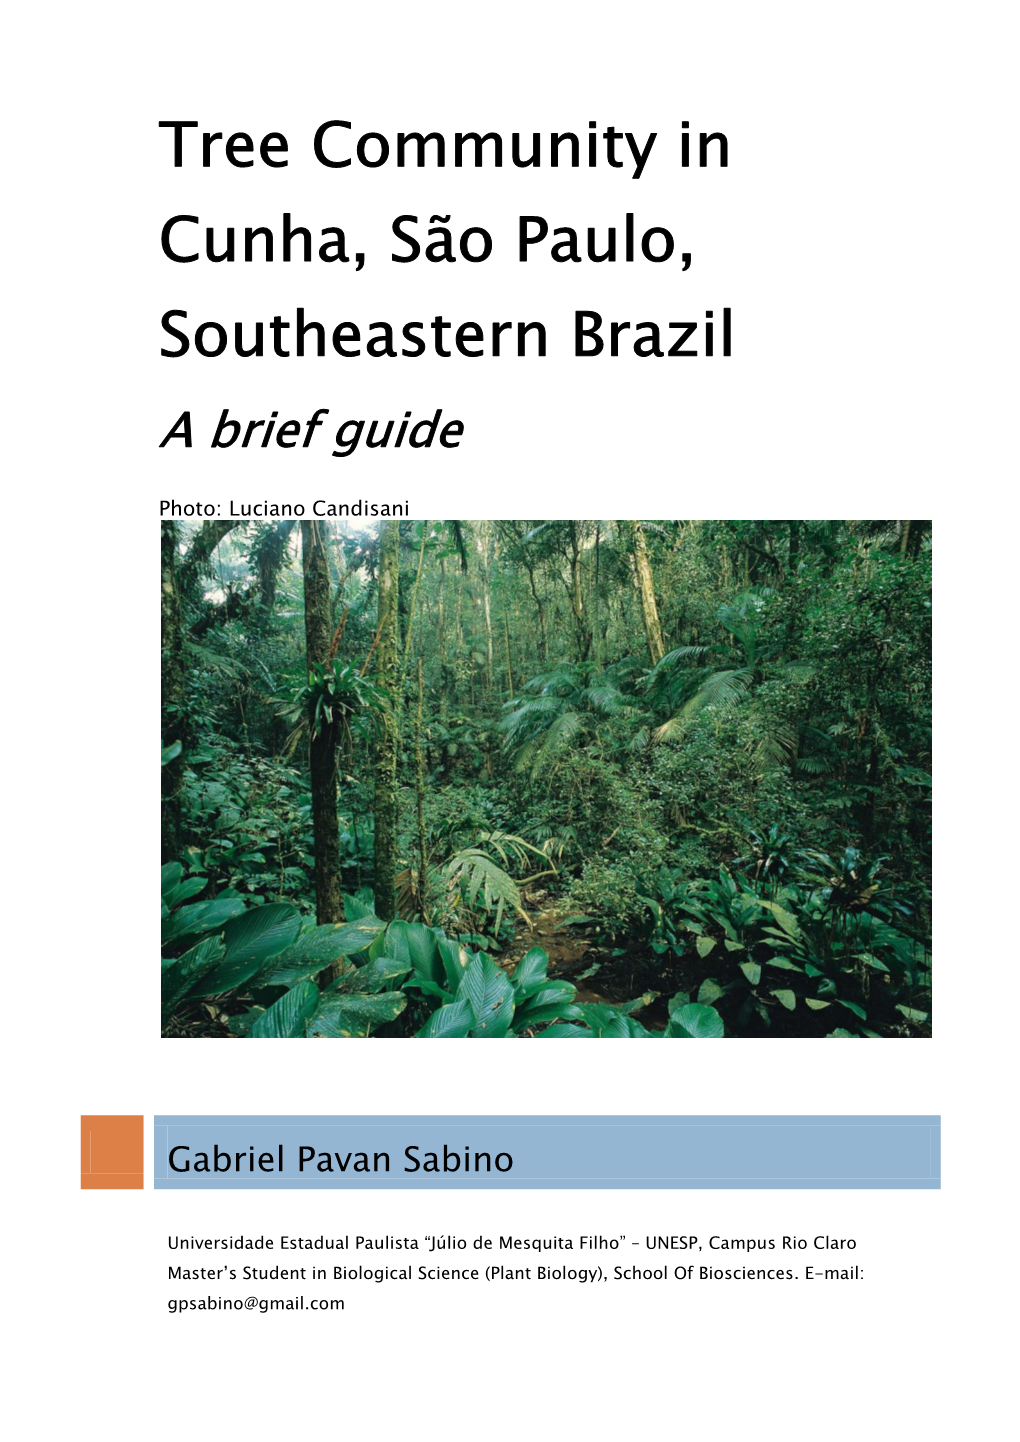 Tree Community in Cunha, São Paulo, Southeastern Brazil